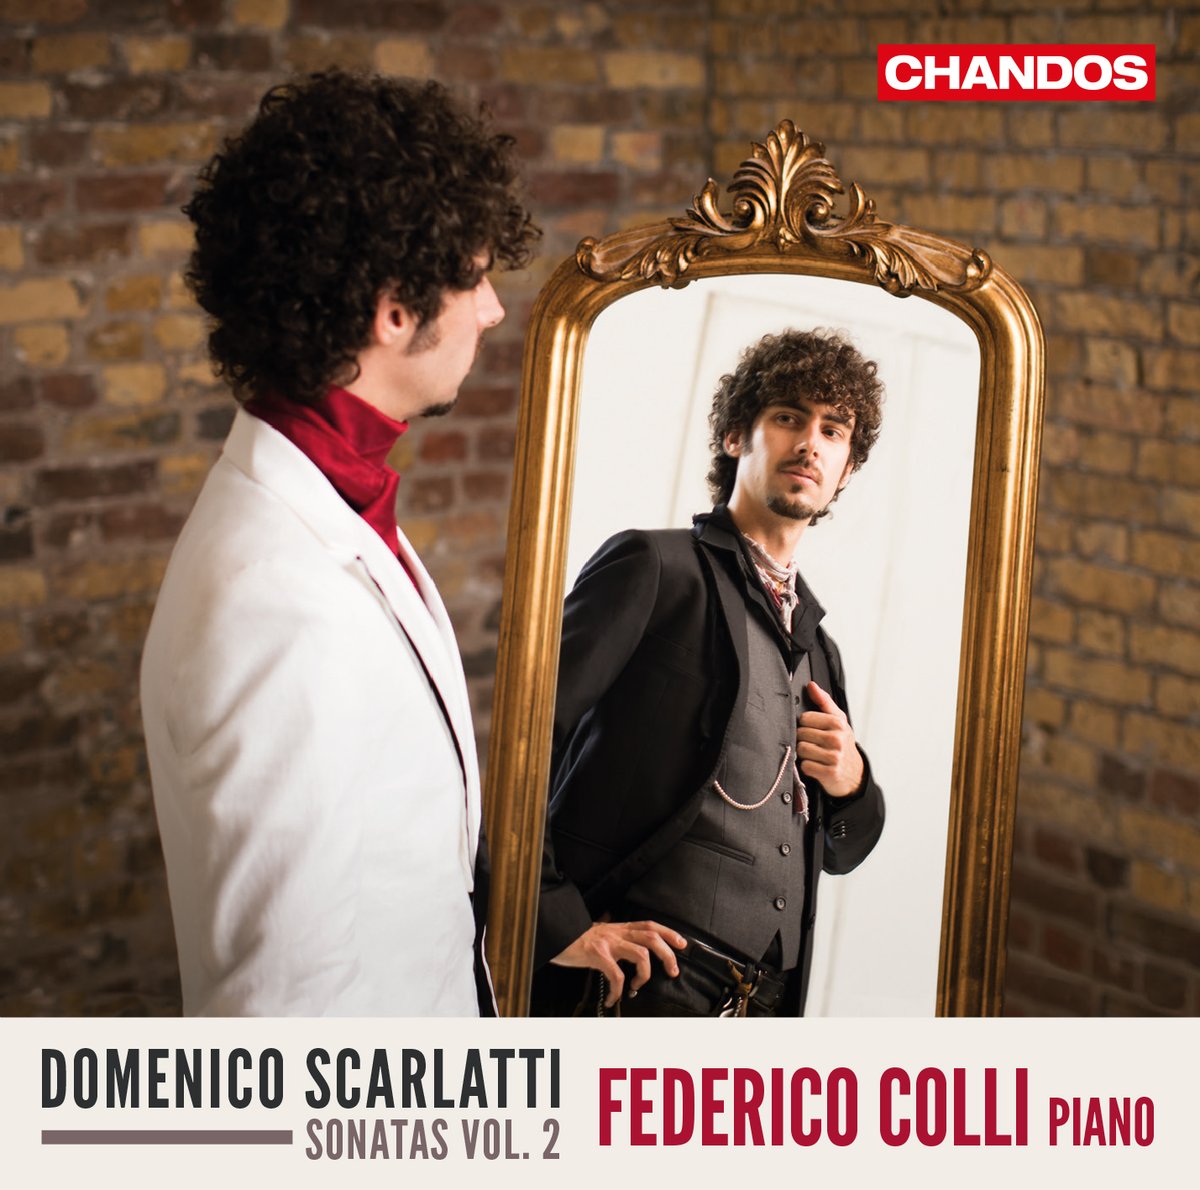 On Friday the renowned pianist @Federico_Colli releases Scarlatti Sonatas Vol. 2 on Chandos. Pre-order now lnk.to/fcscarlatti2